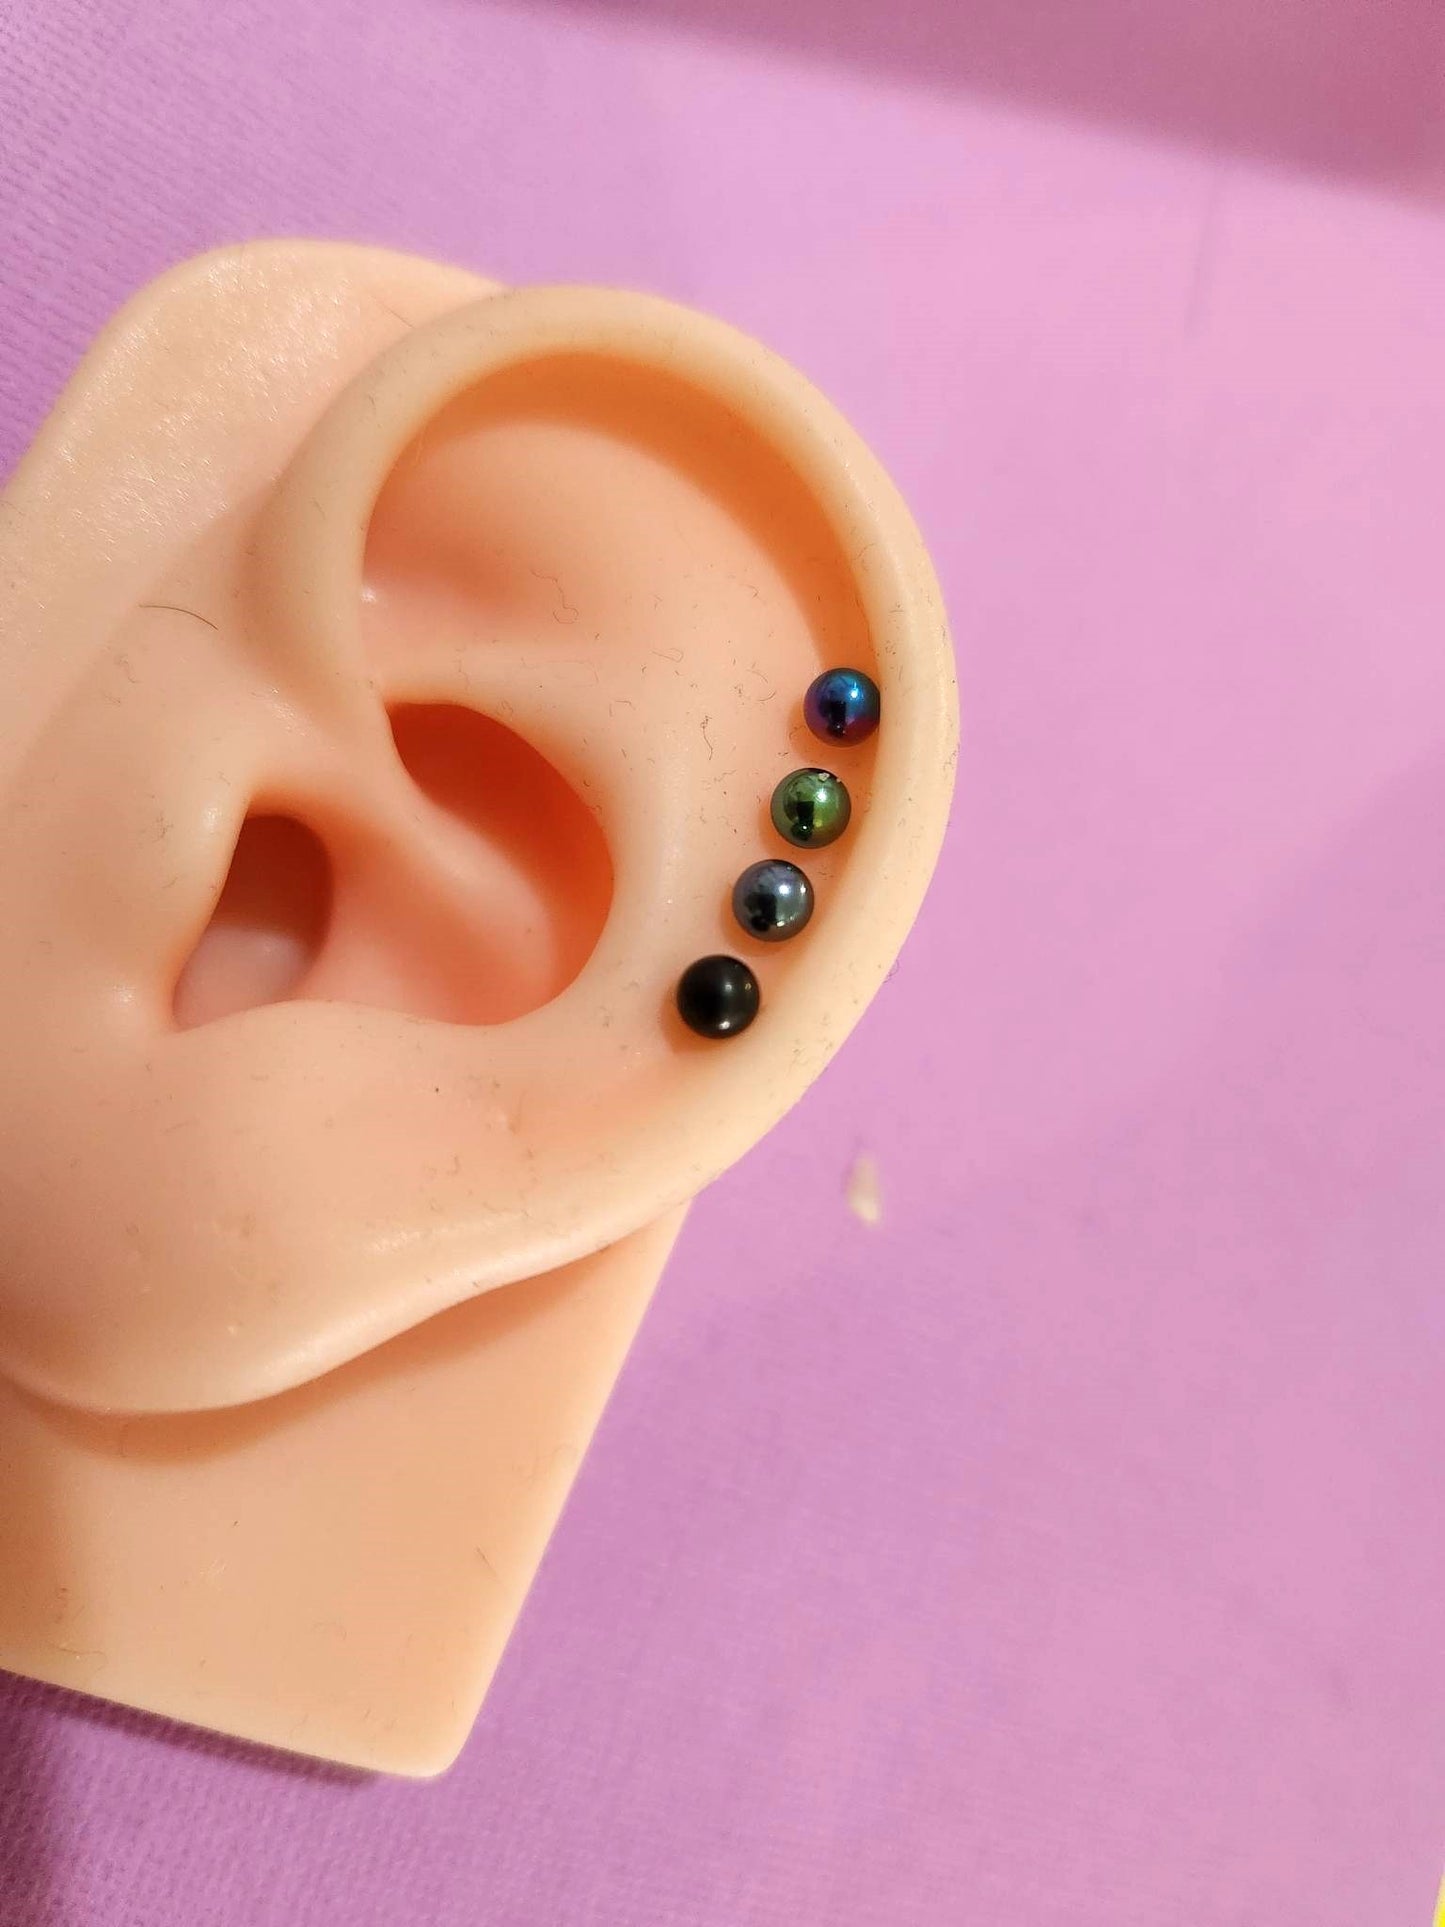 Double Ball End Anodized Tragus Cartilage Ear Piercing Bars 16g 6mm - Pierced n Proud